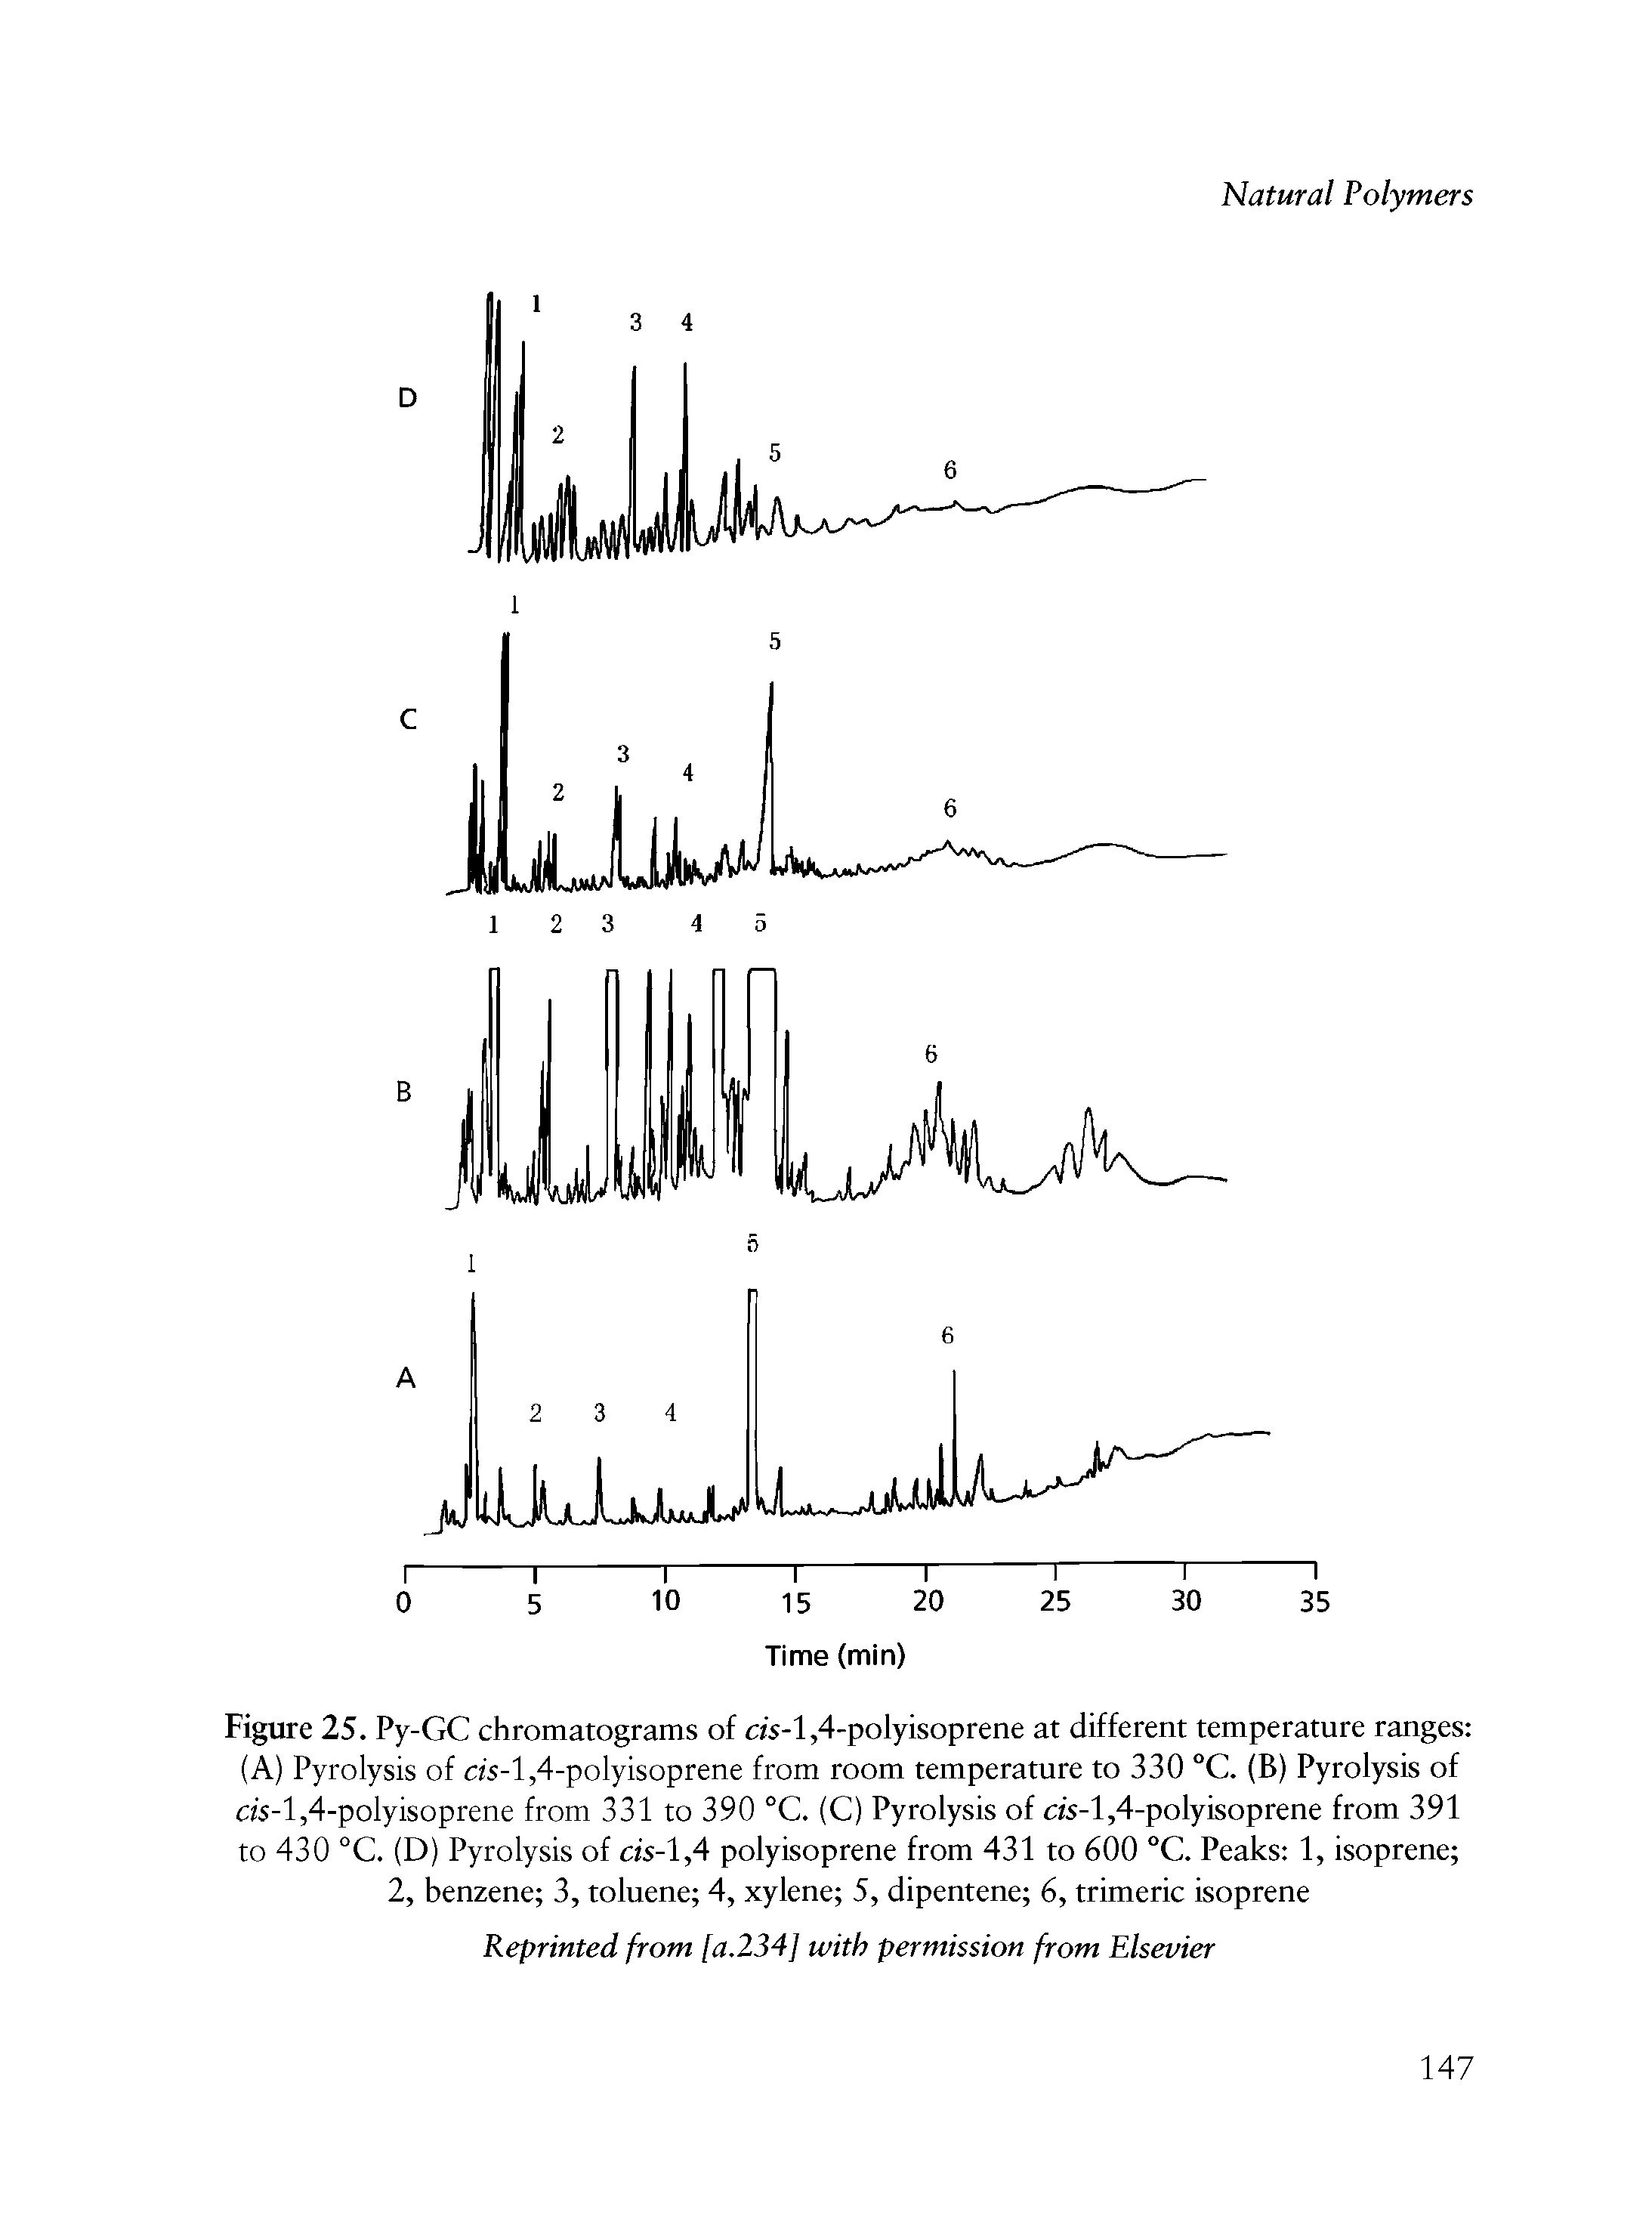 Figure 25. Py-GC chromatograms of c/s-l,4-polyisoprene at different temperature ranges (A) Pyrolysis of c/5-l,4-polyisoprene from room temperature to 330 °C. (B) Pyrolysis of ds-l,4-polyisoprene from 331 to 390 °C. (C) Pyrolysis of c/s-1,4-polyisoprene from 391 to 430 °C. (D) Pyrolysis of cis-1,4 polyisoprene from 431 to 600 °C. Peaks 1, isoprene 2, benzene 3, toluene 4, xylene 5, dipentene 6, trimeric isoprene...